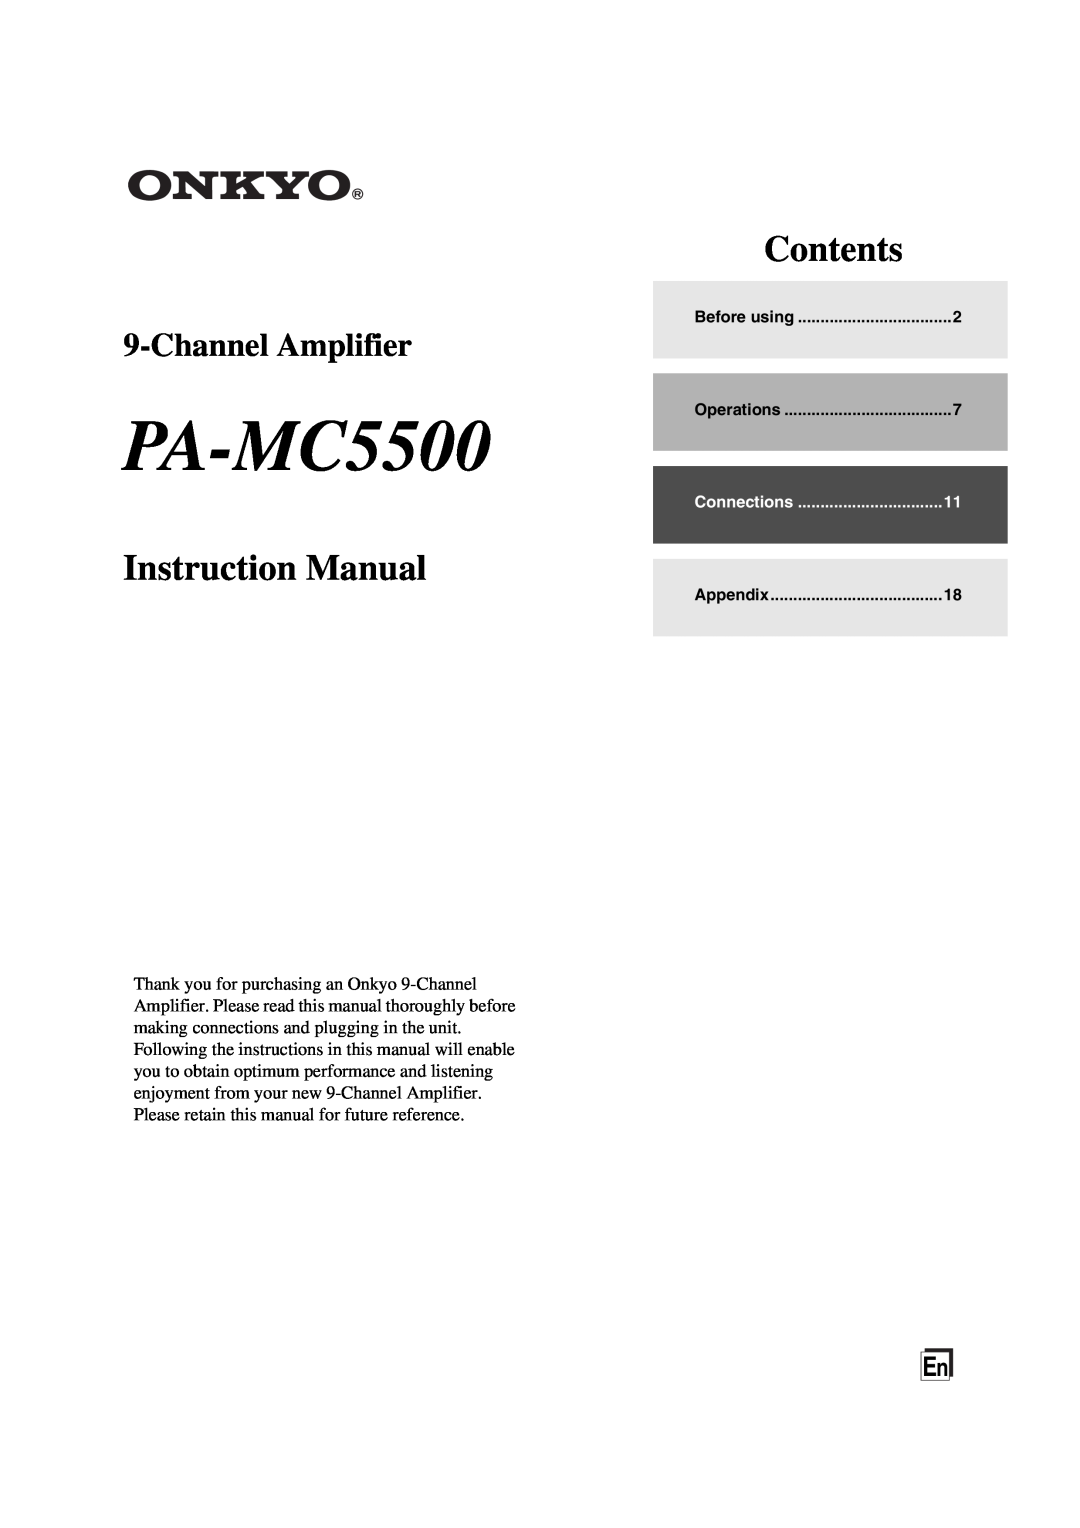 Onkyo PA-MC5500 instruction manual Contents, ChannelAmplifier 